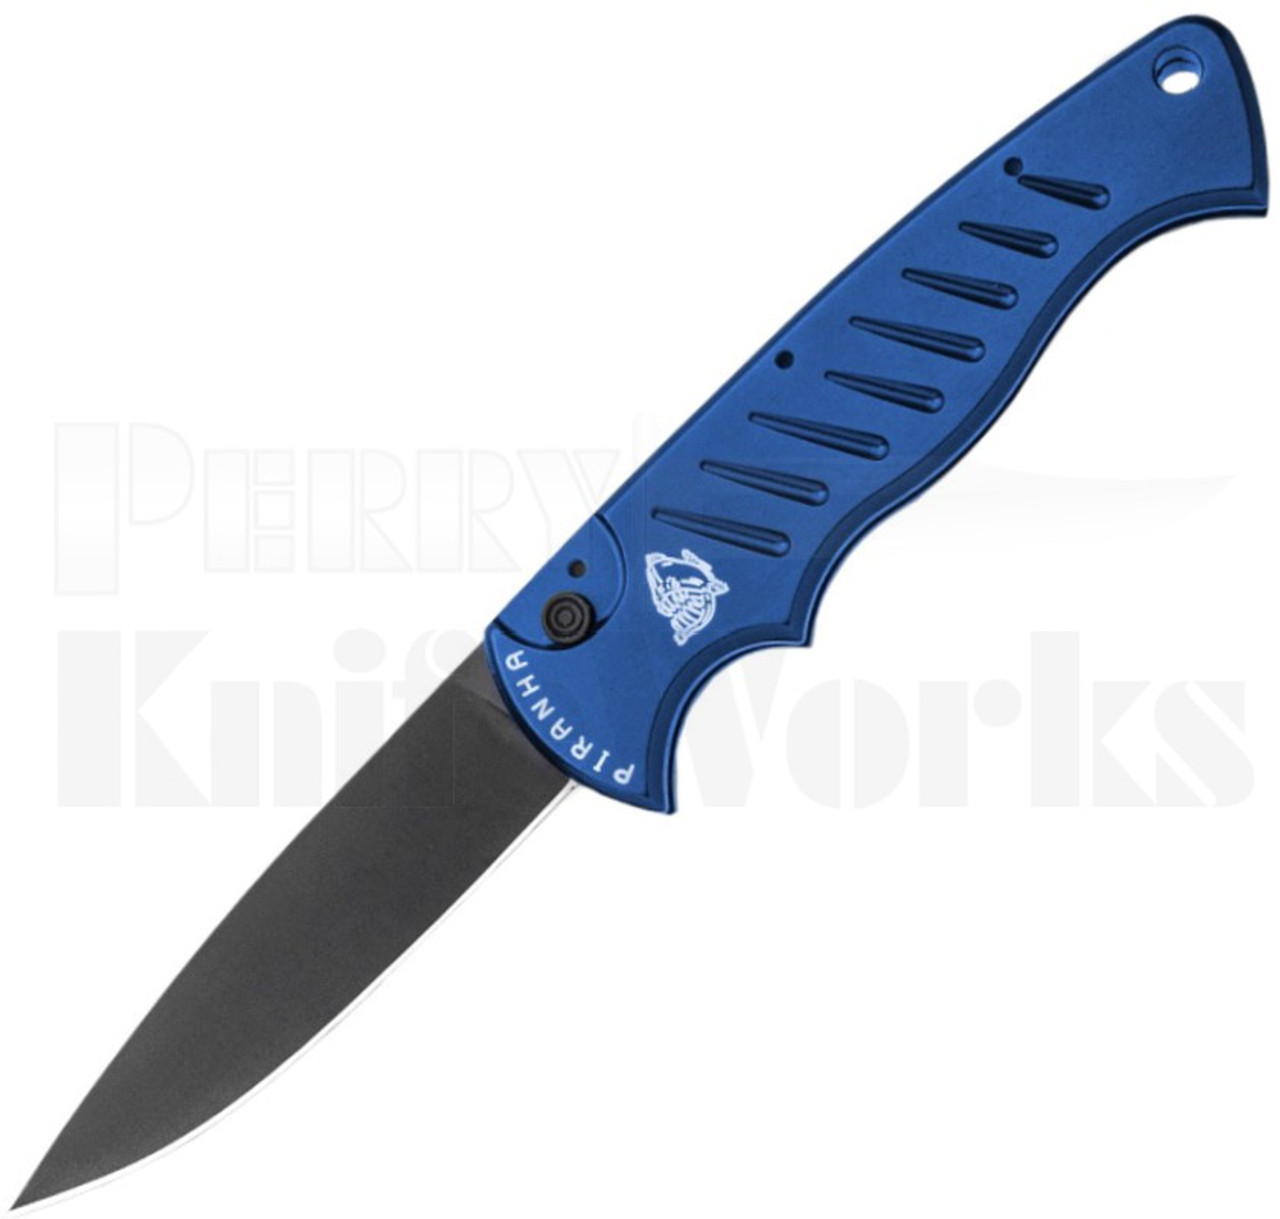 Piranha Pocket Automatic Knife Blue P-1 l Tactical Black l For Sale